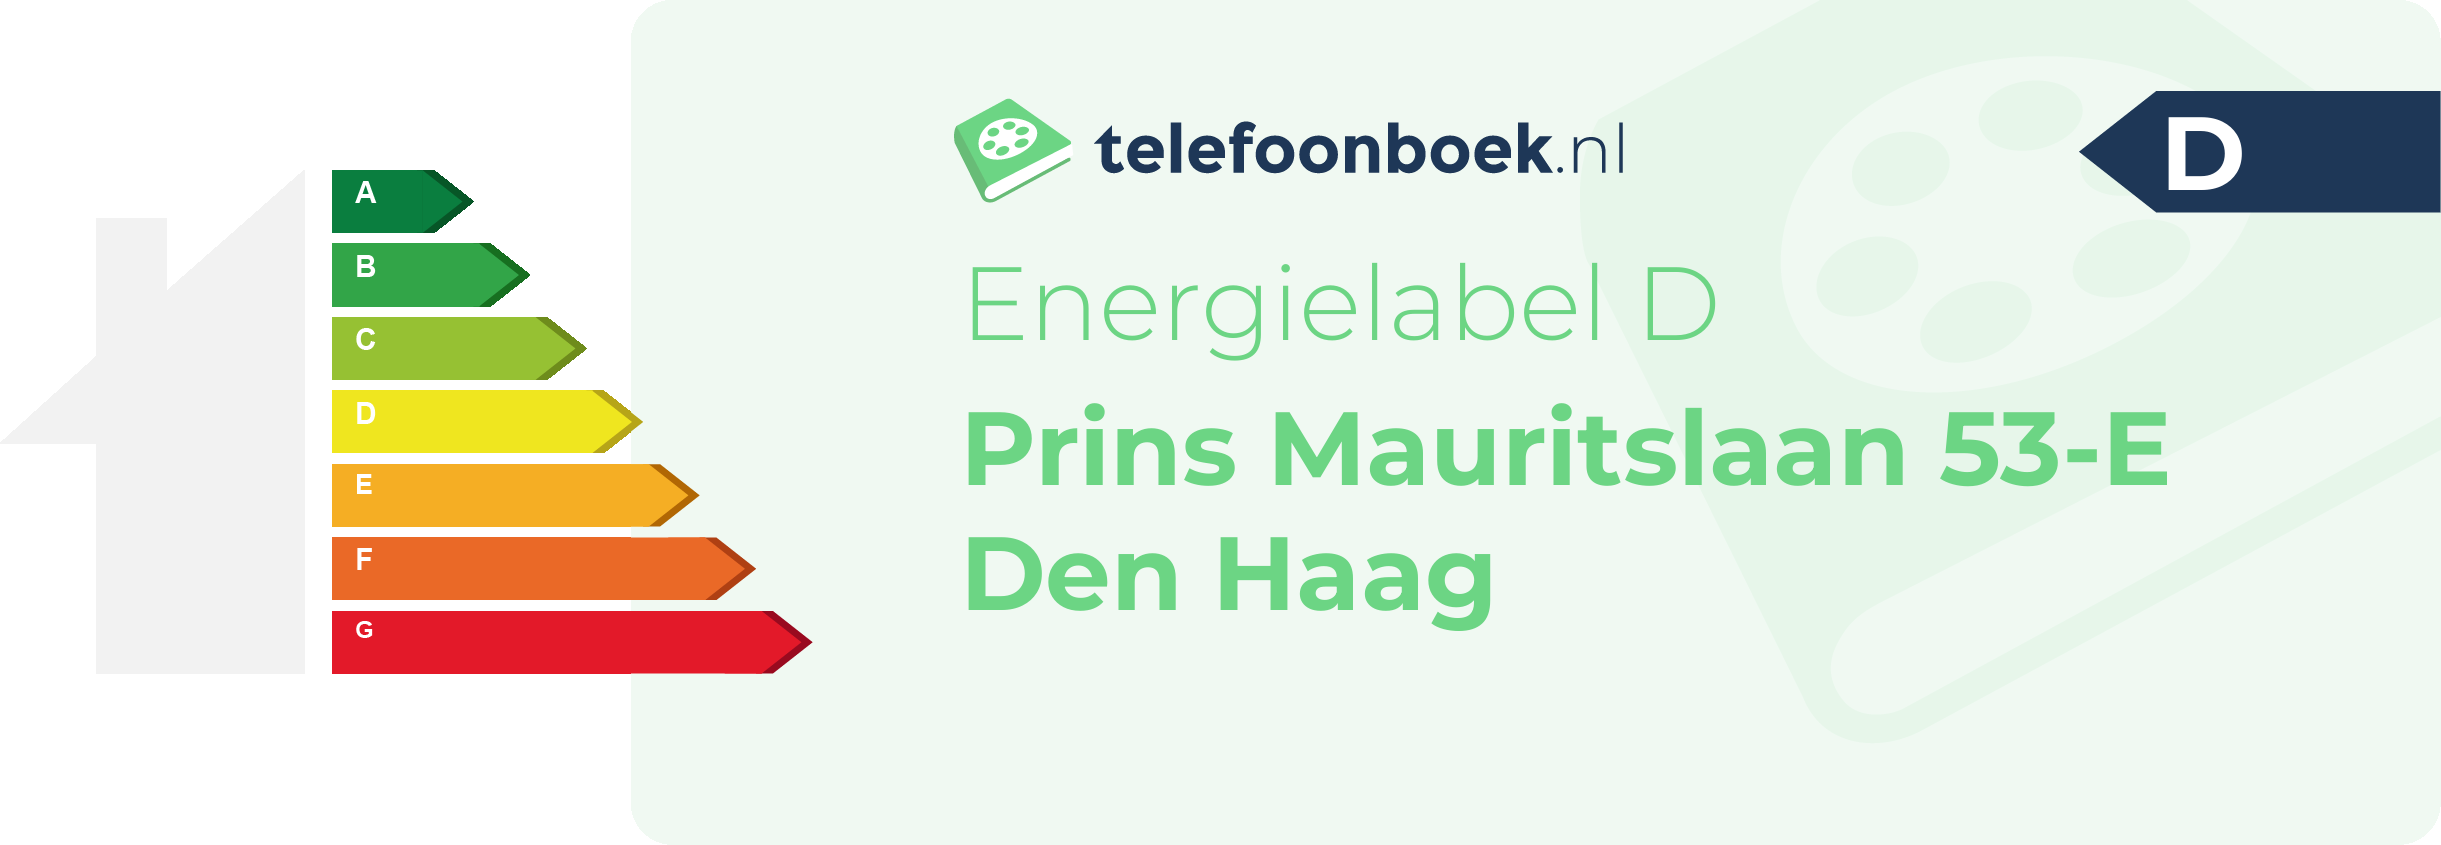 Energielabel Prins Mauritslaan 53-E Den Haag